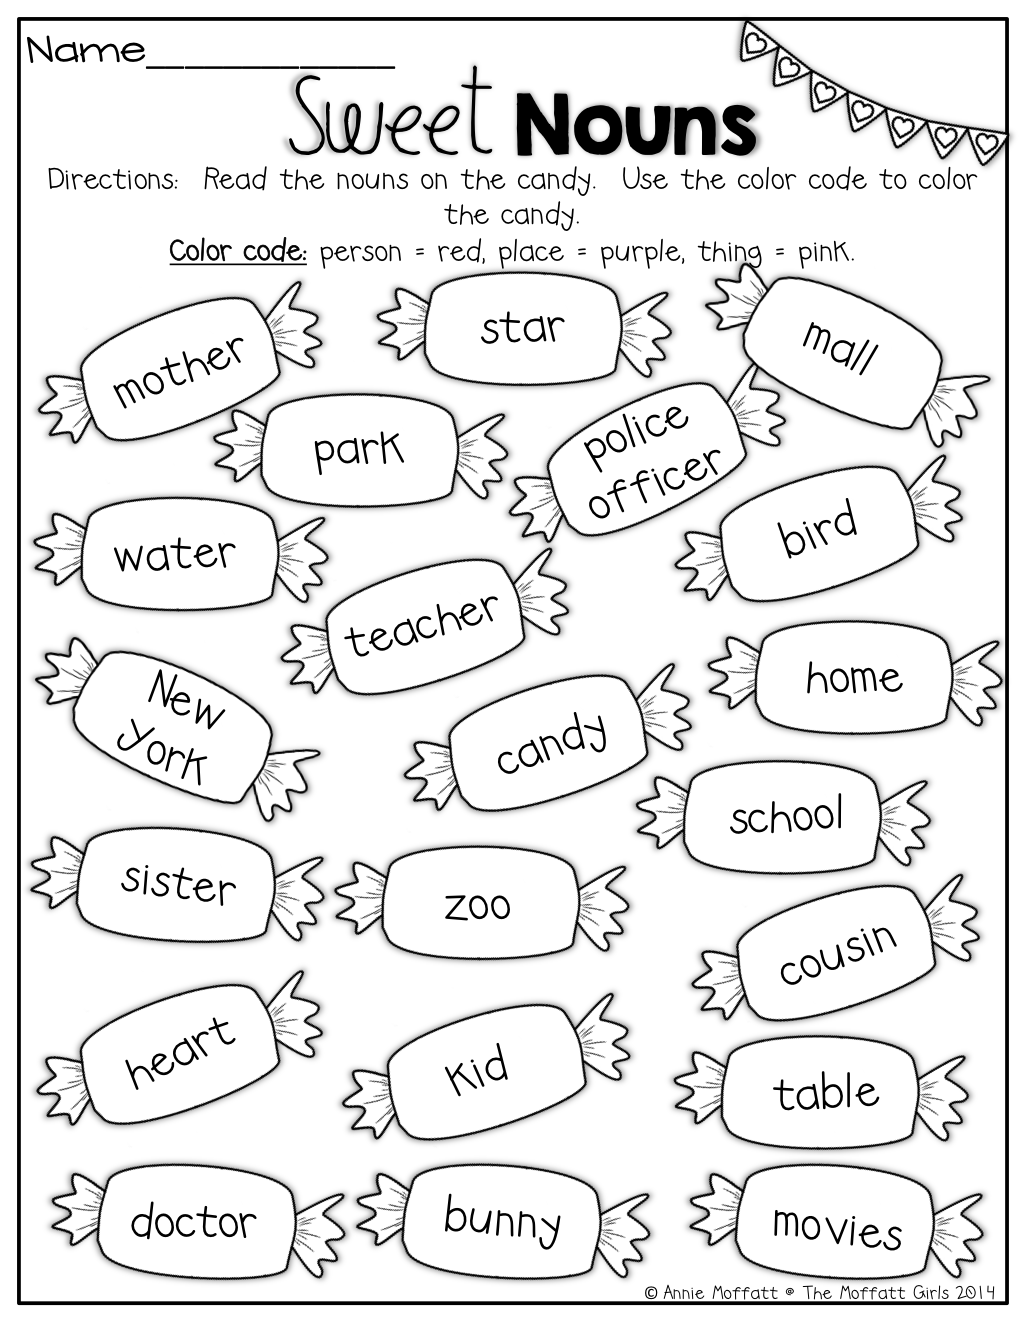 27-helping-verbs-worksheet-4th-grade-notutahituq-worksheet-information